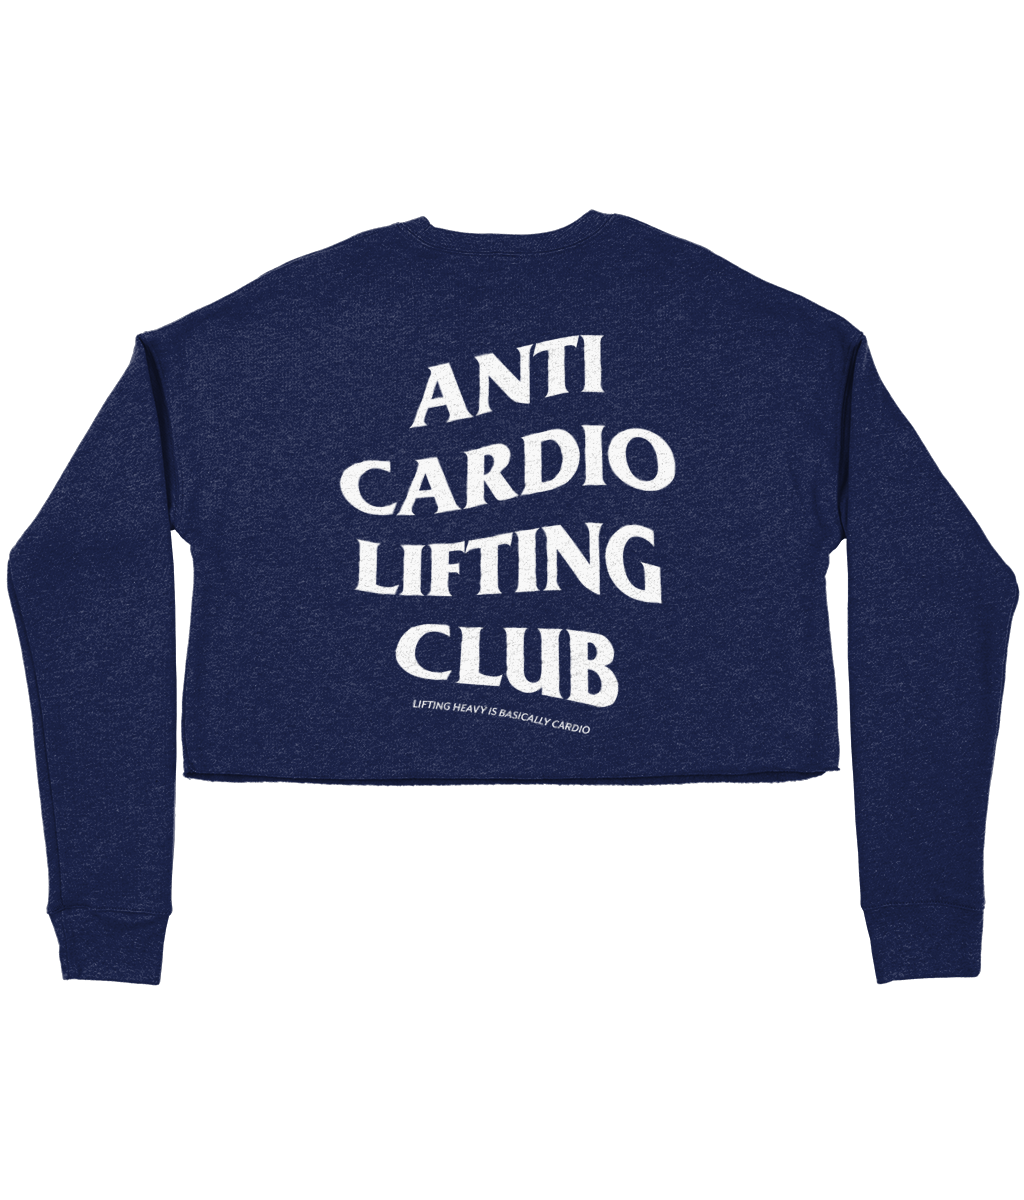 Anti Cardio Lifting Club cropped jumper